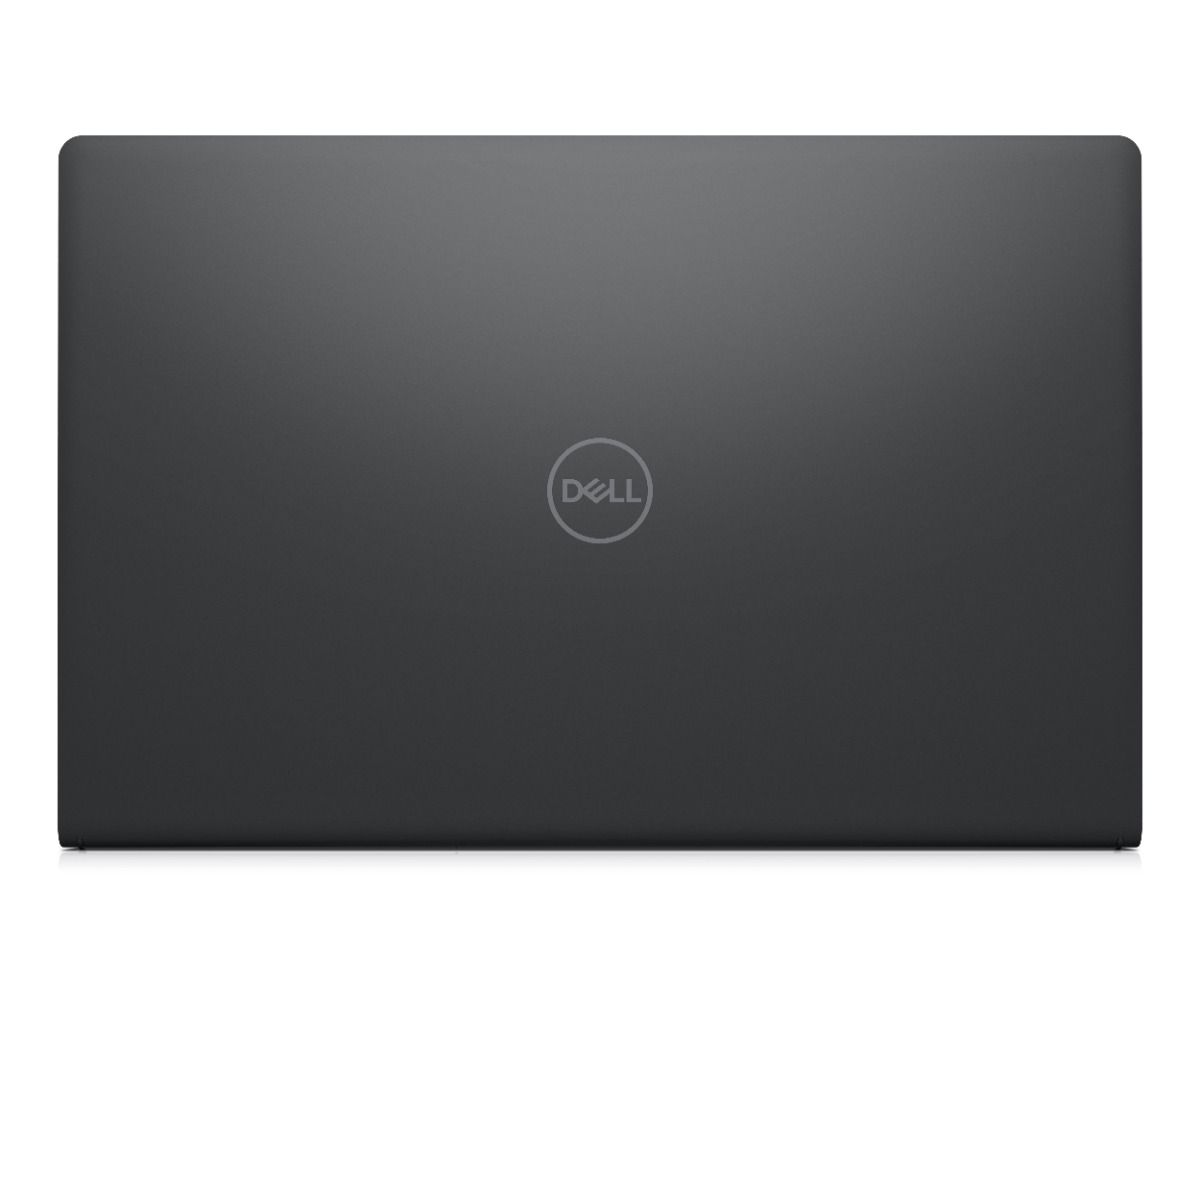 Dell Laptop Inspiron 3515 15.6" Full HD AMD Ryzen 5 3500U 8GB RAM 256GB SSD